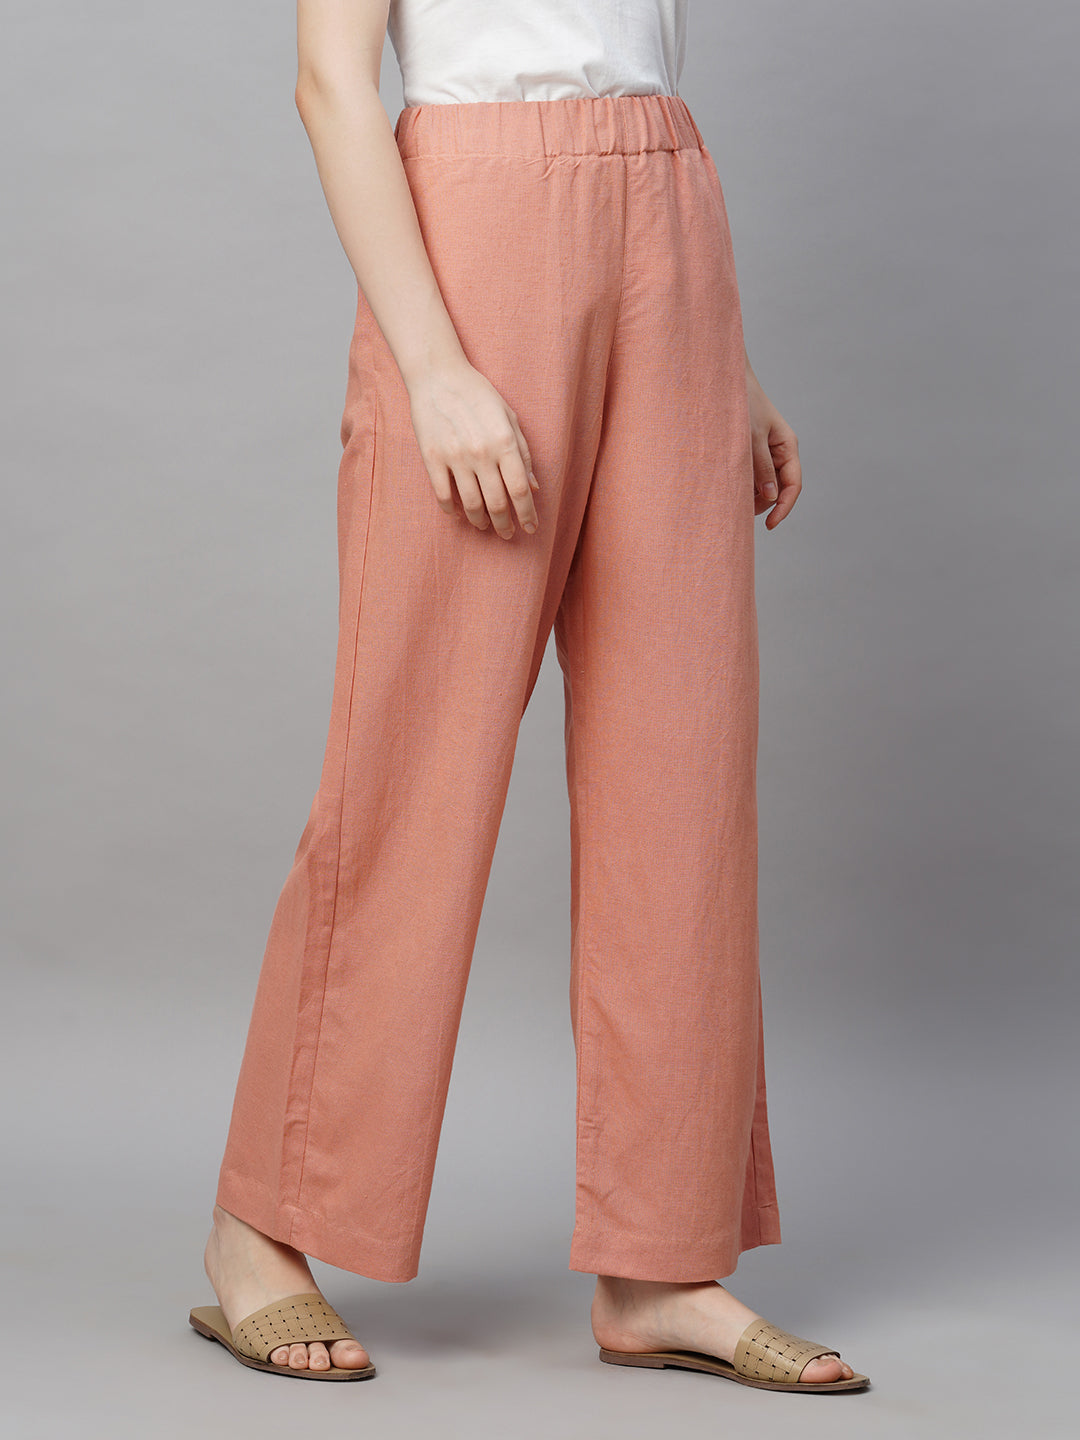 Peach Rayon Regular Wear Women Pant-44582